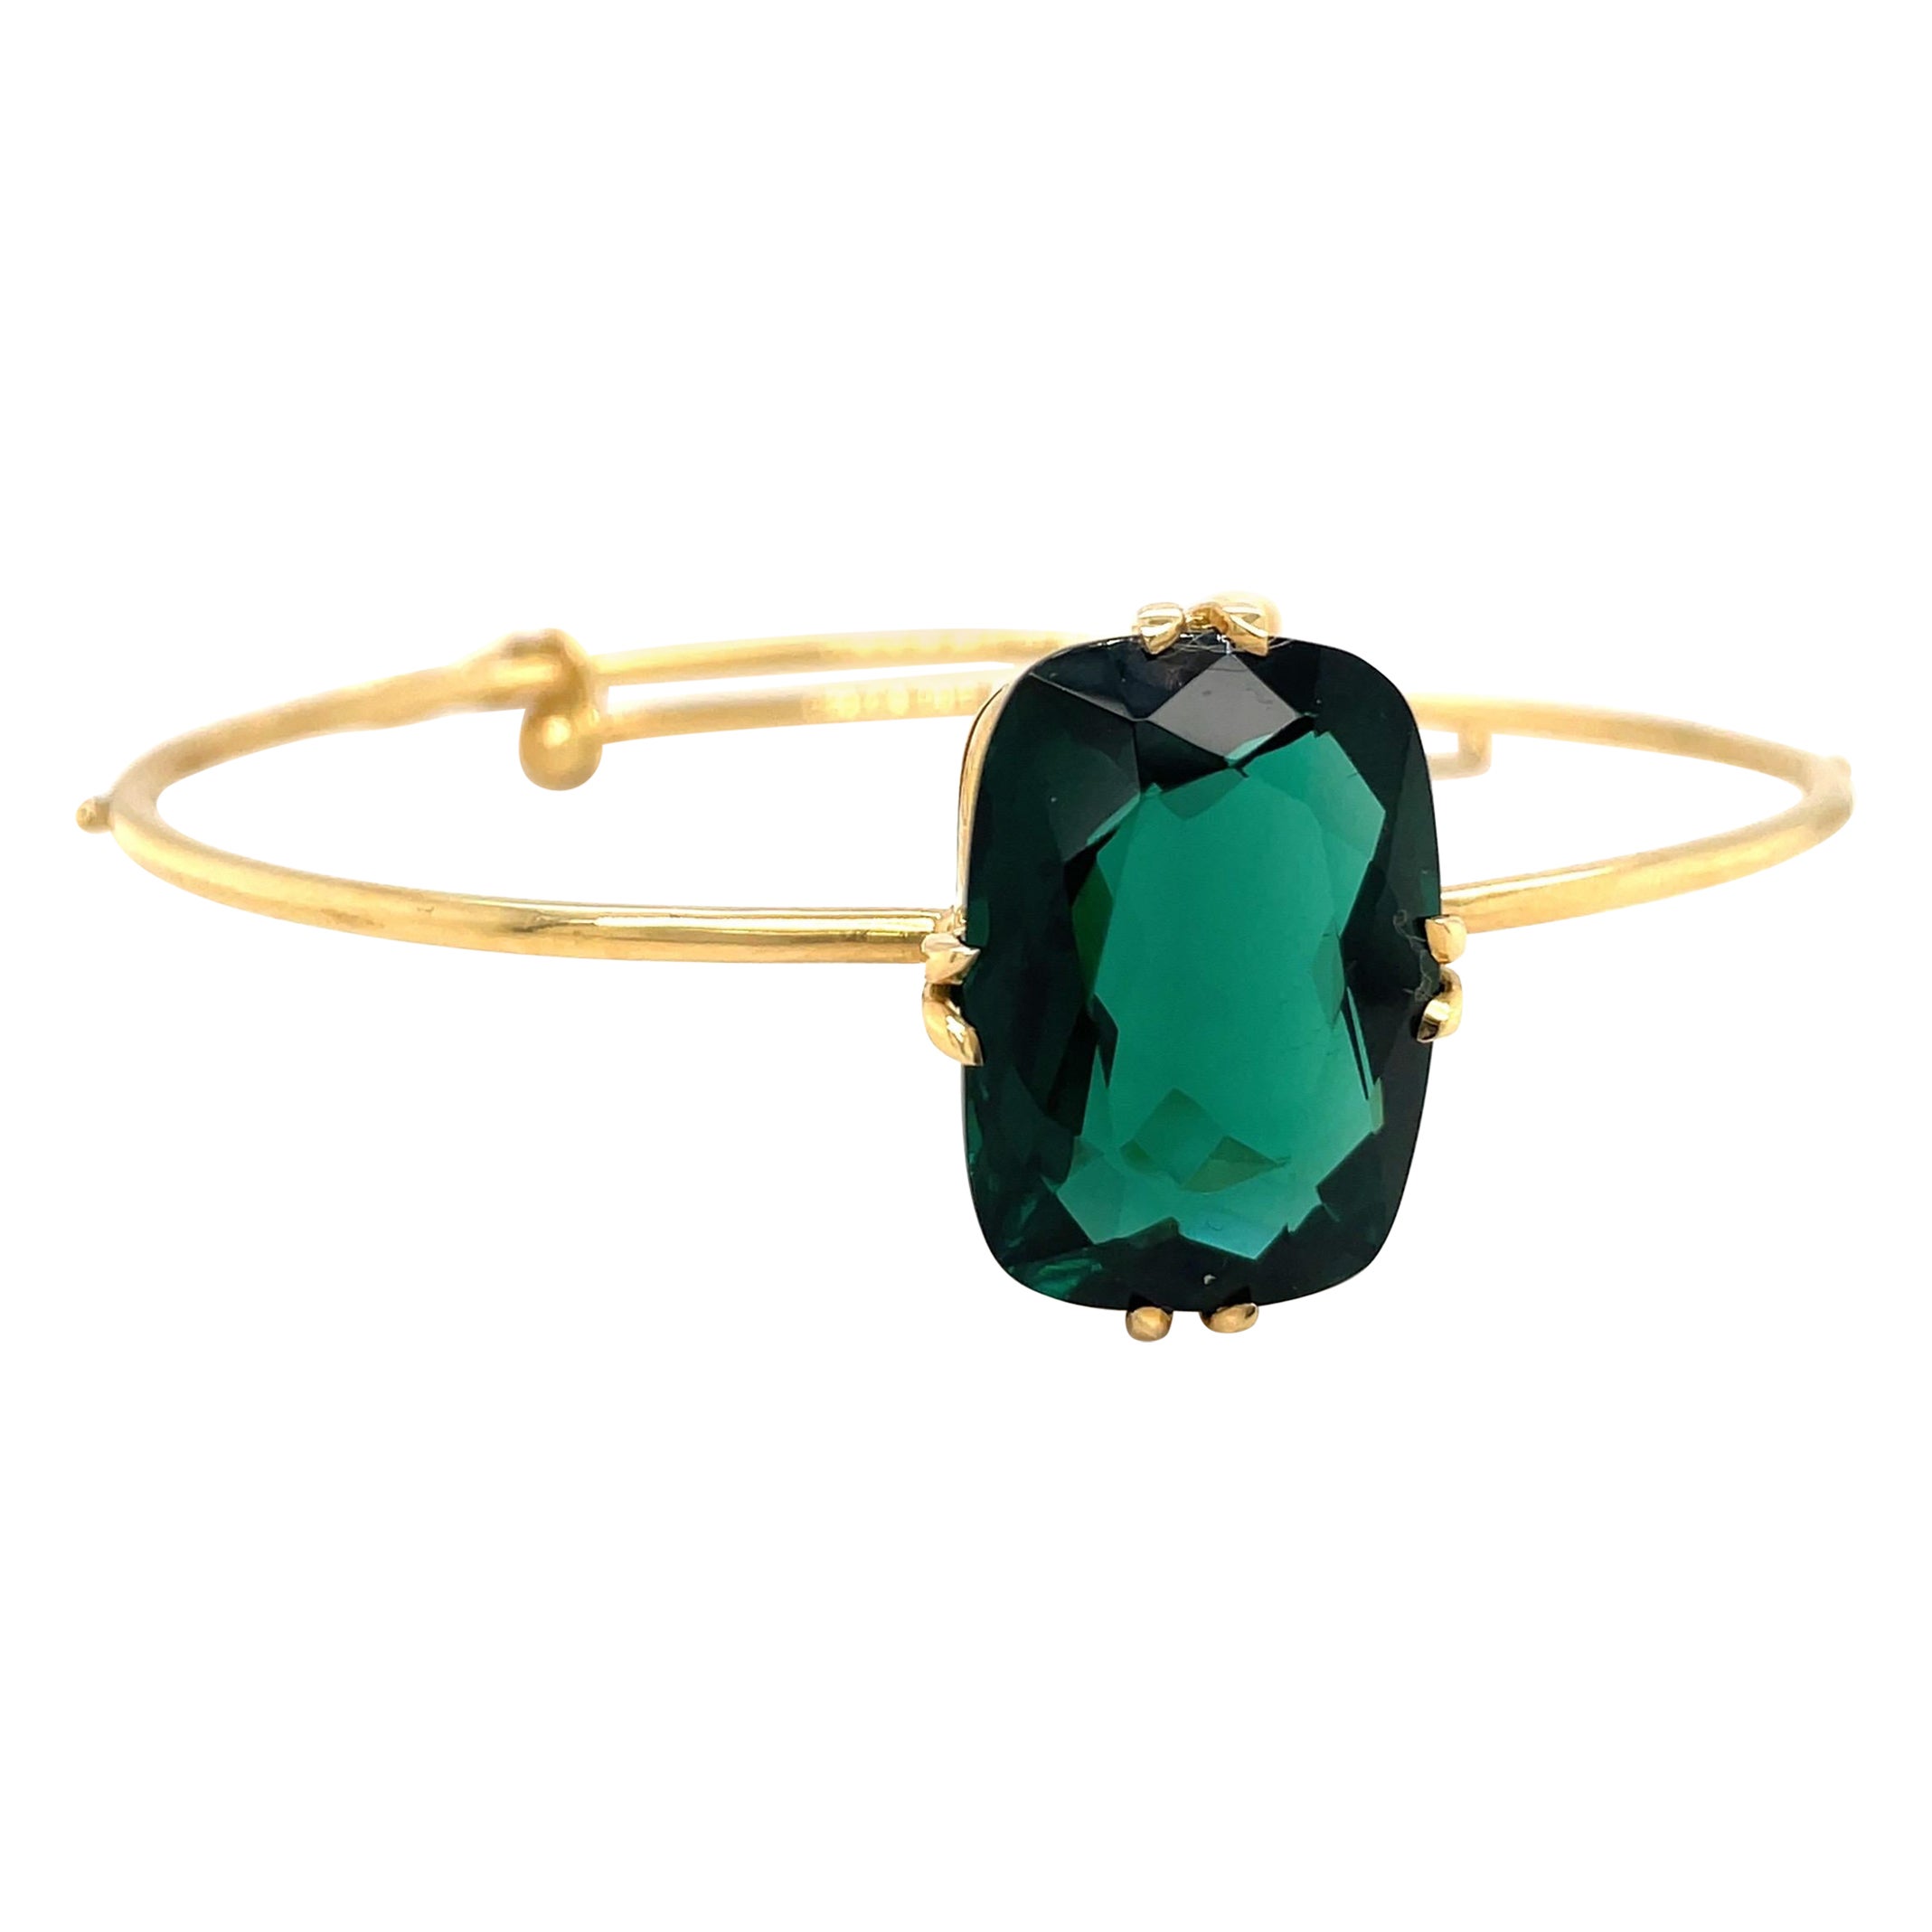 Cellini 18KT Yellow Gold 15.72 CT Green Quartz Adjustable Bangle Bracelet